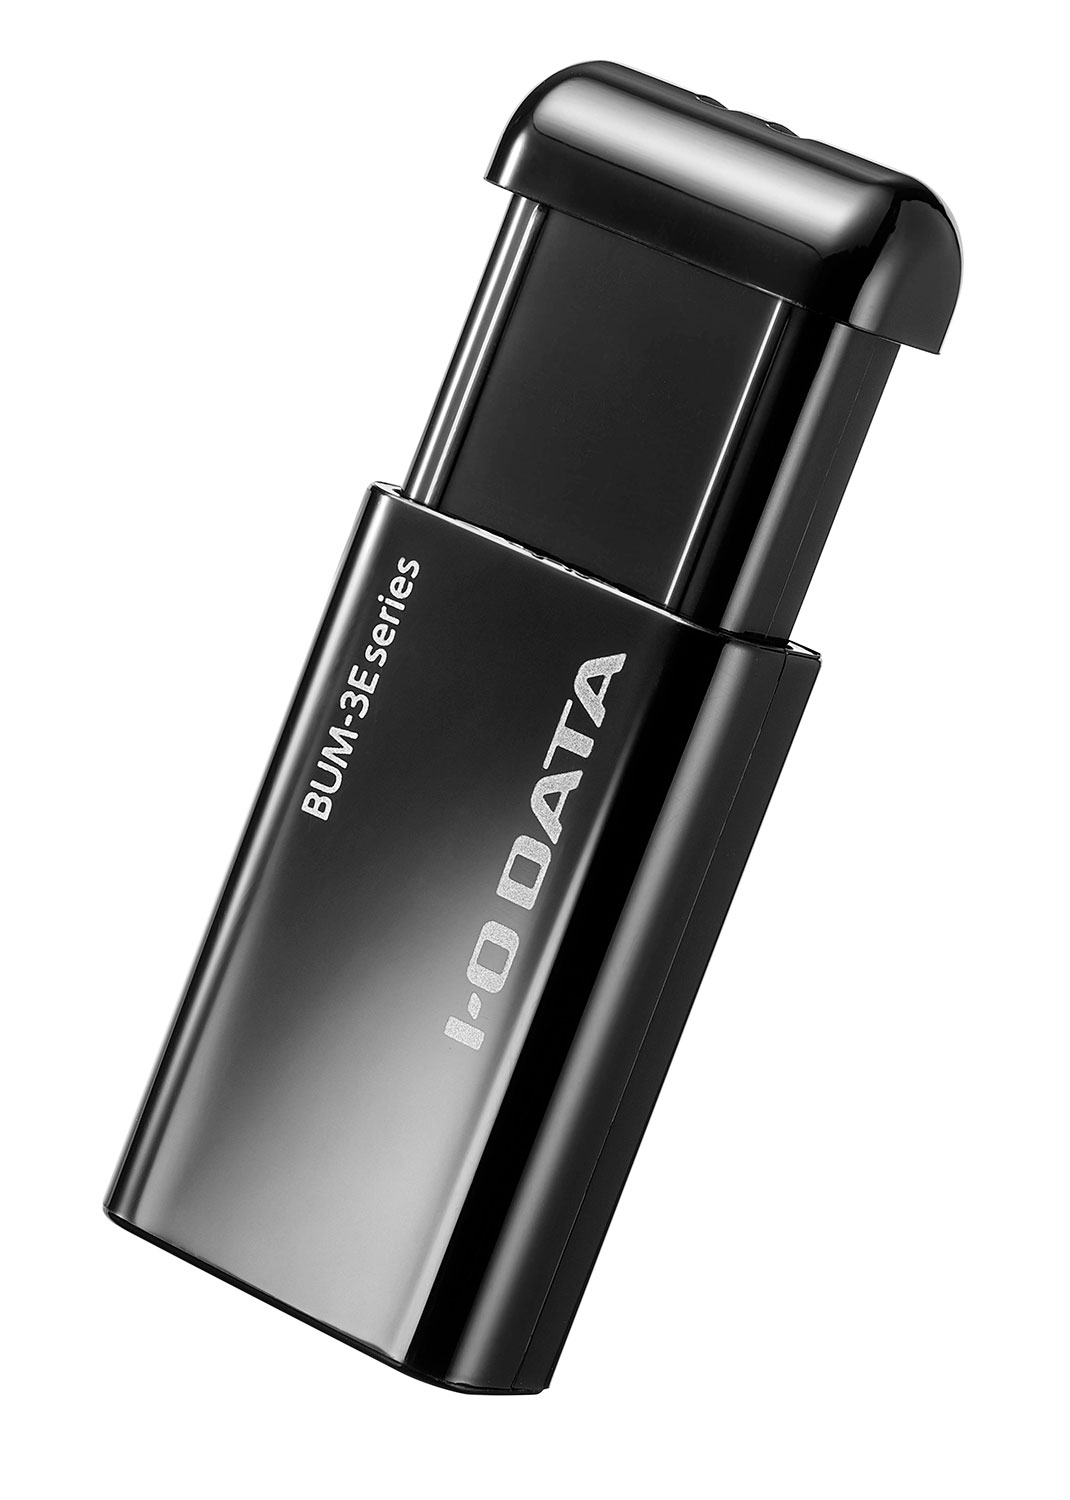 BUM-3Eシリーズ 仕様 | USBメモリー | IODATA アイ・オー・データ機器